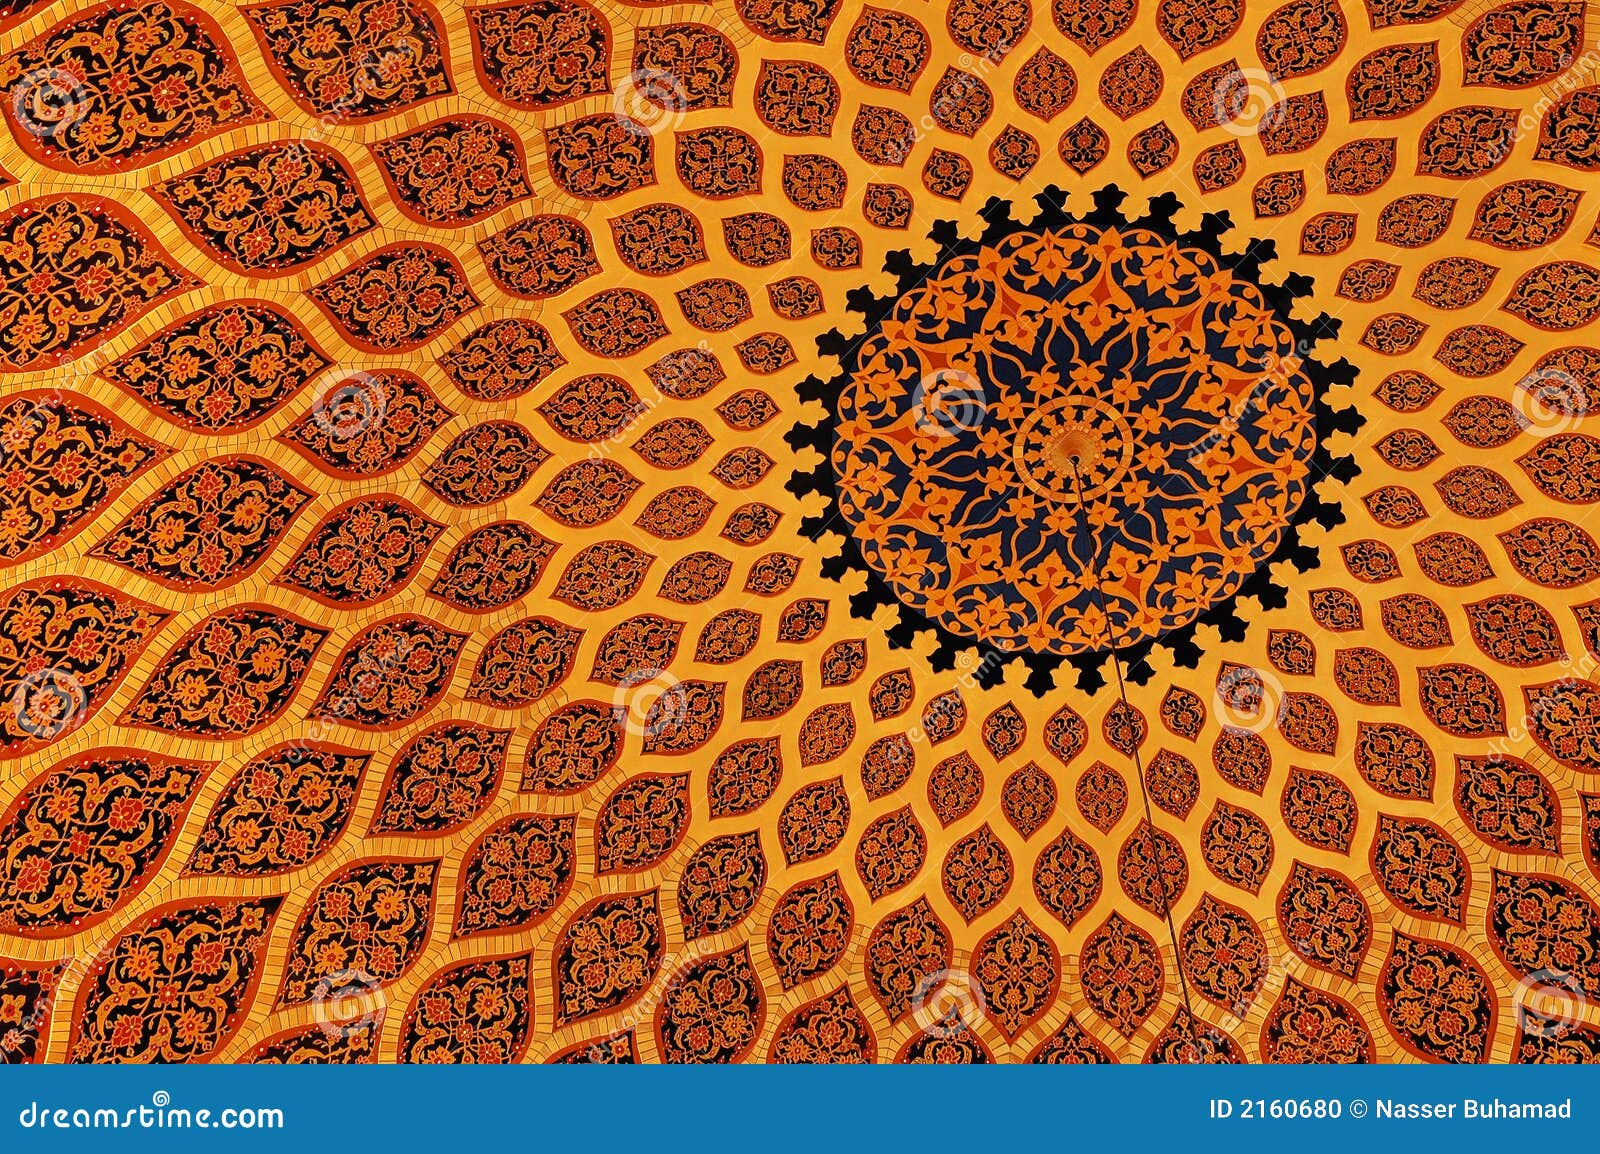 Islamic Texture